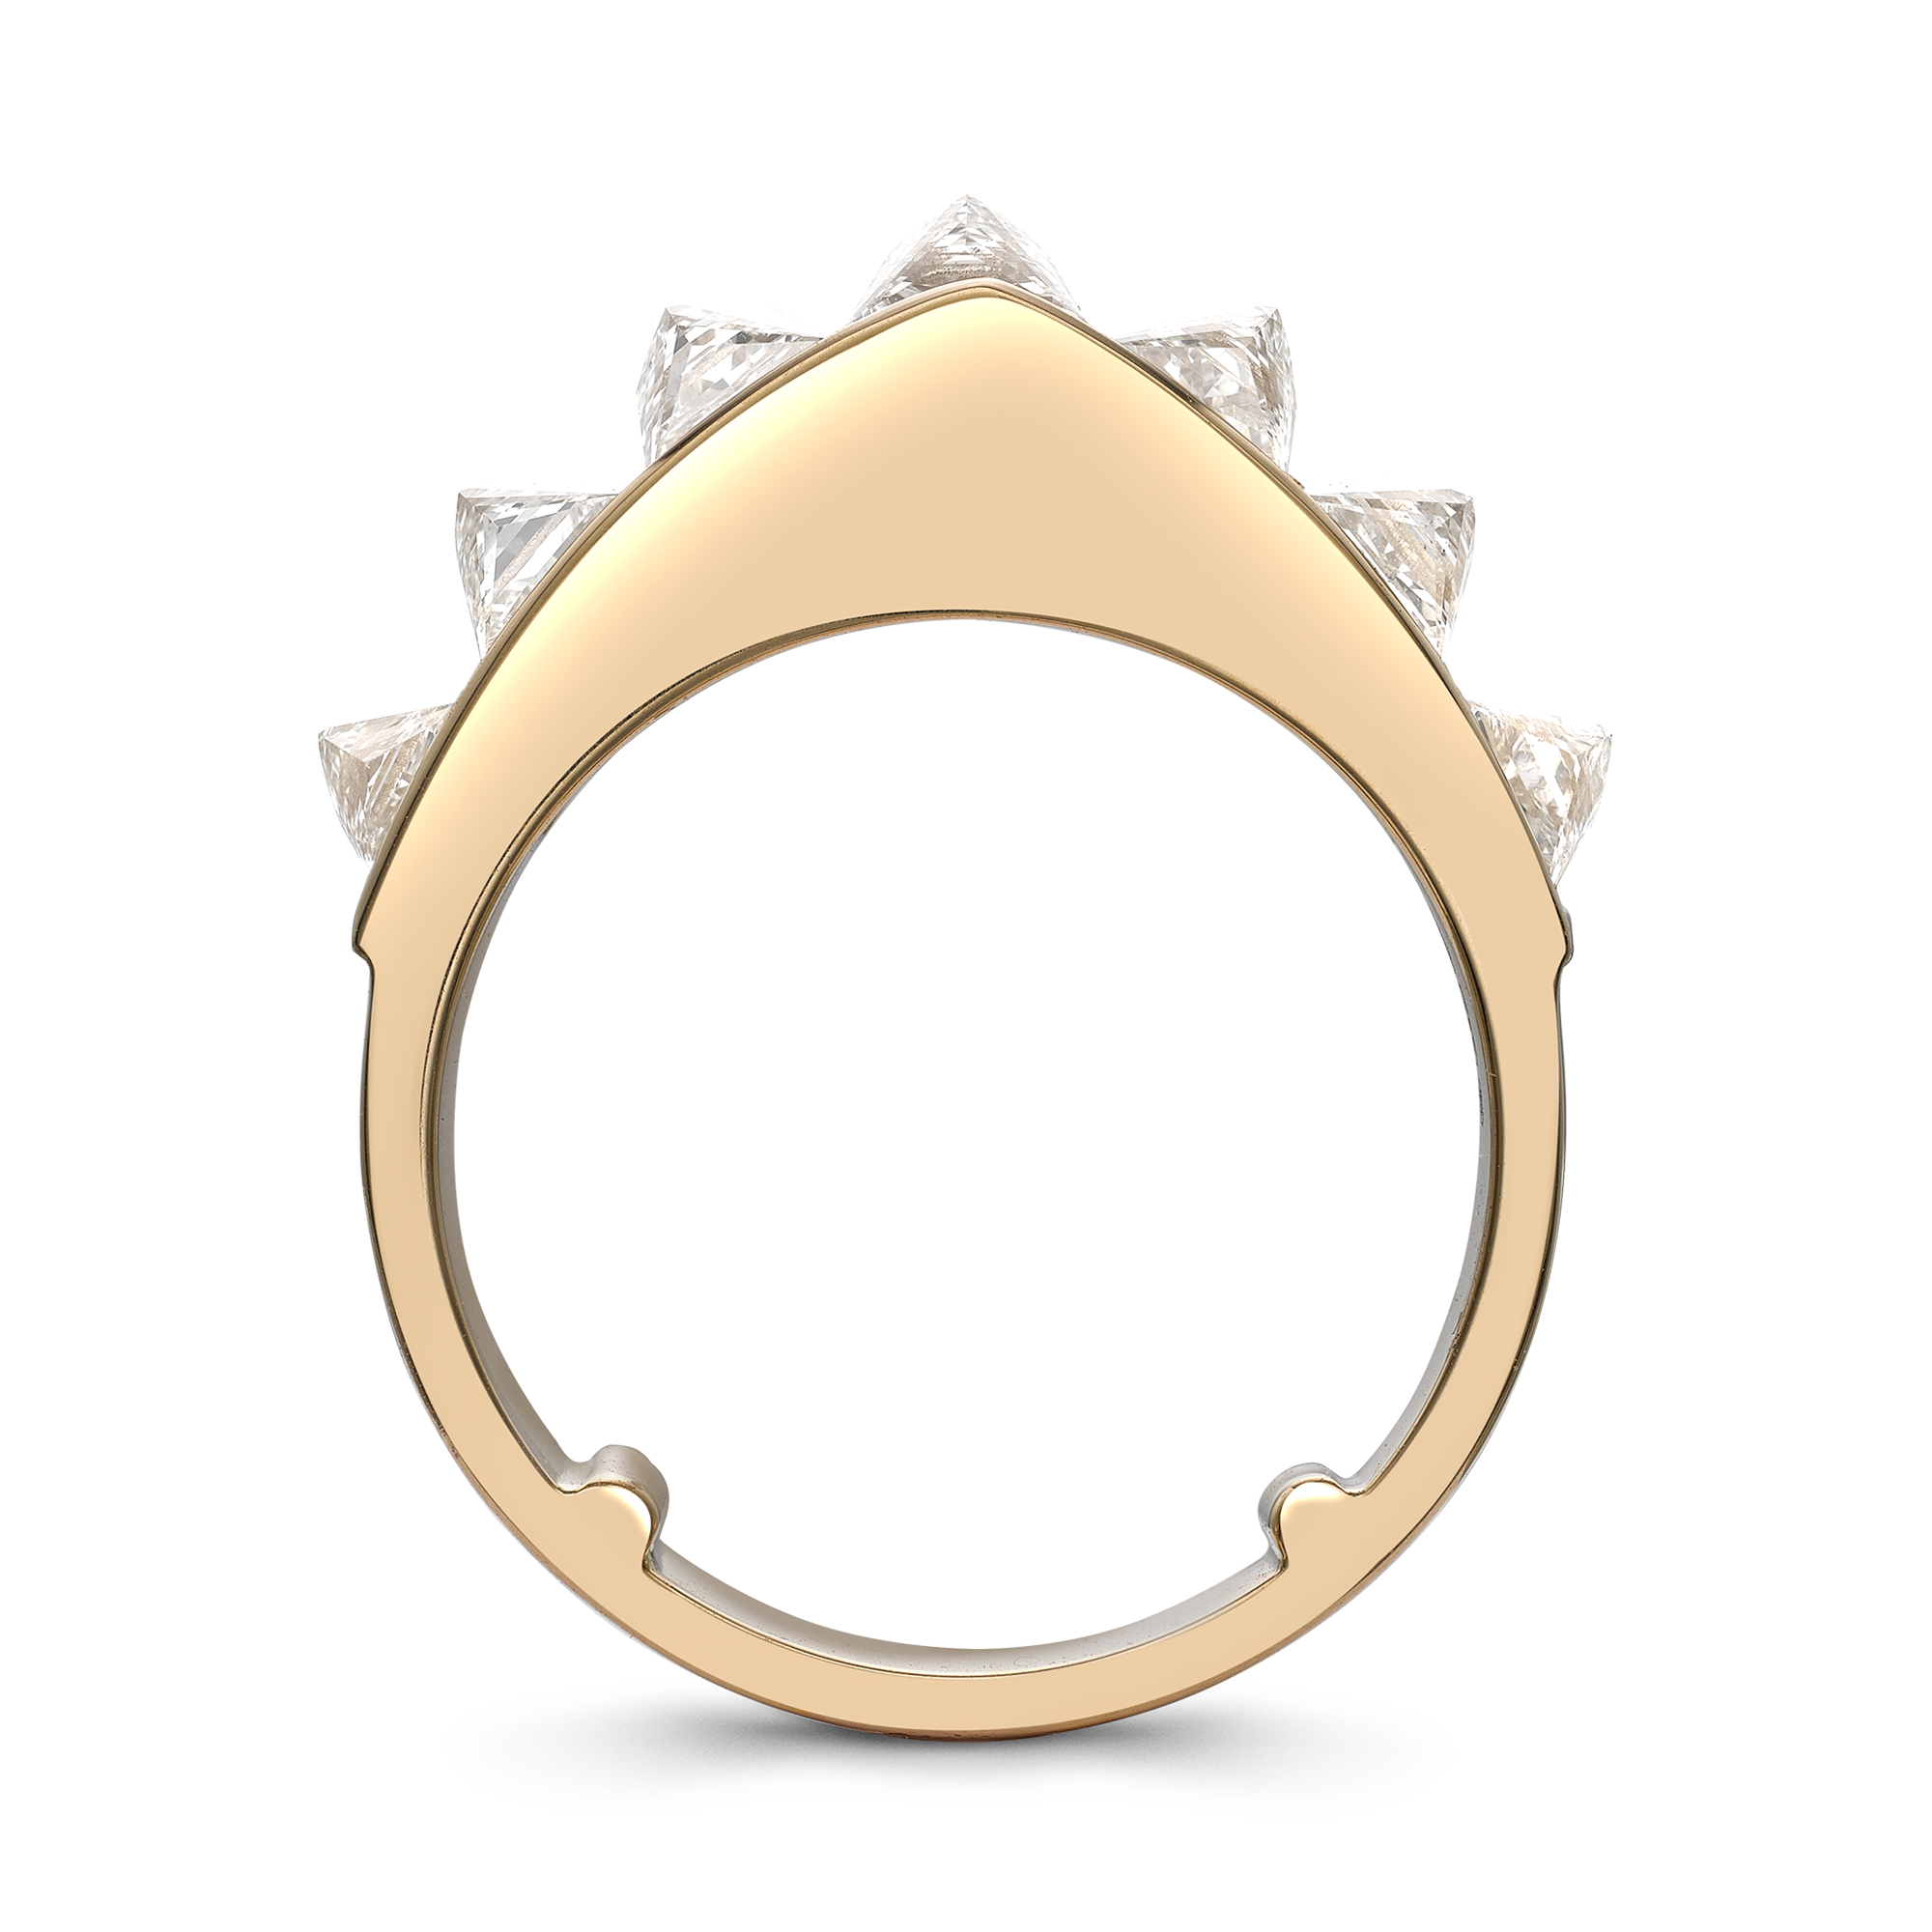 RockChic 2.82ct Peaked Inverted Princess Cut Diamond Seven Stone Ring Princess Cut, Channel Set_3